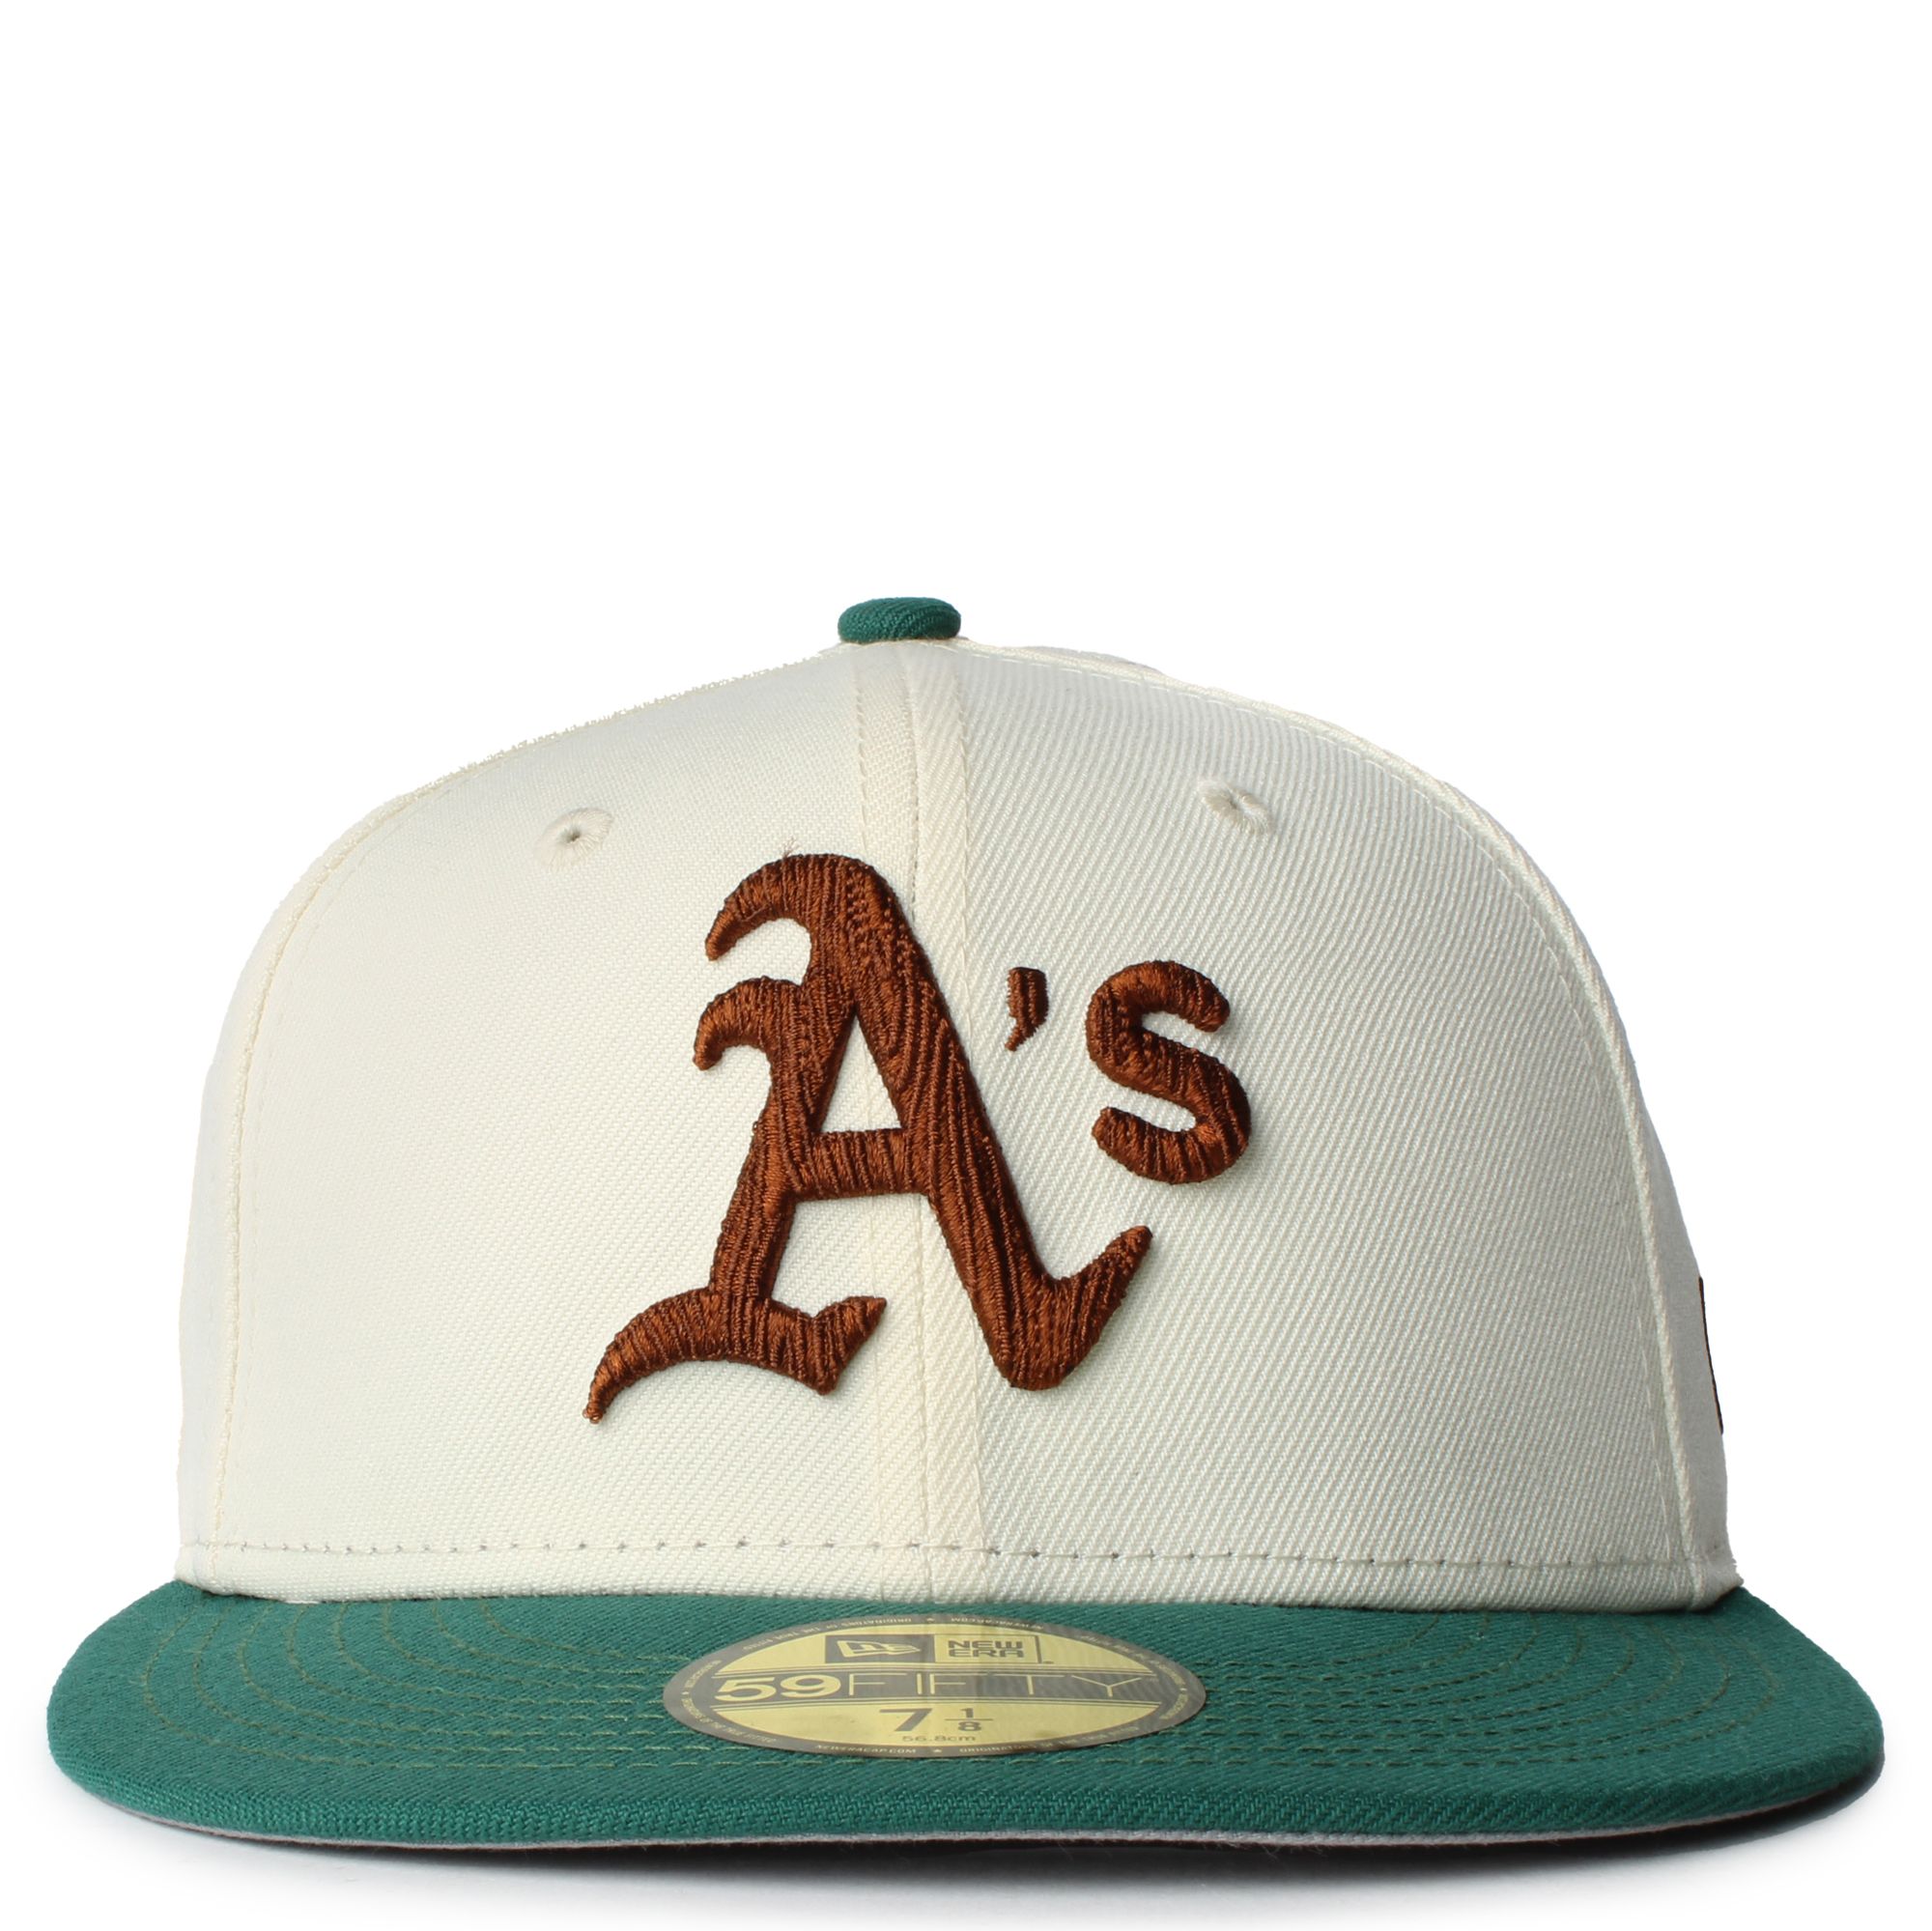 Oakland Athletics Hat, A's Hats, Baseball Cap